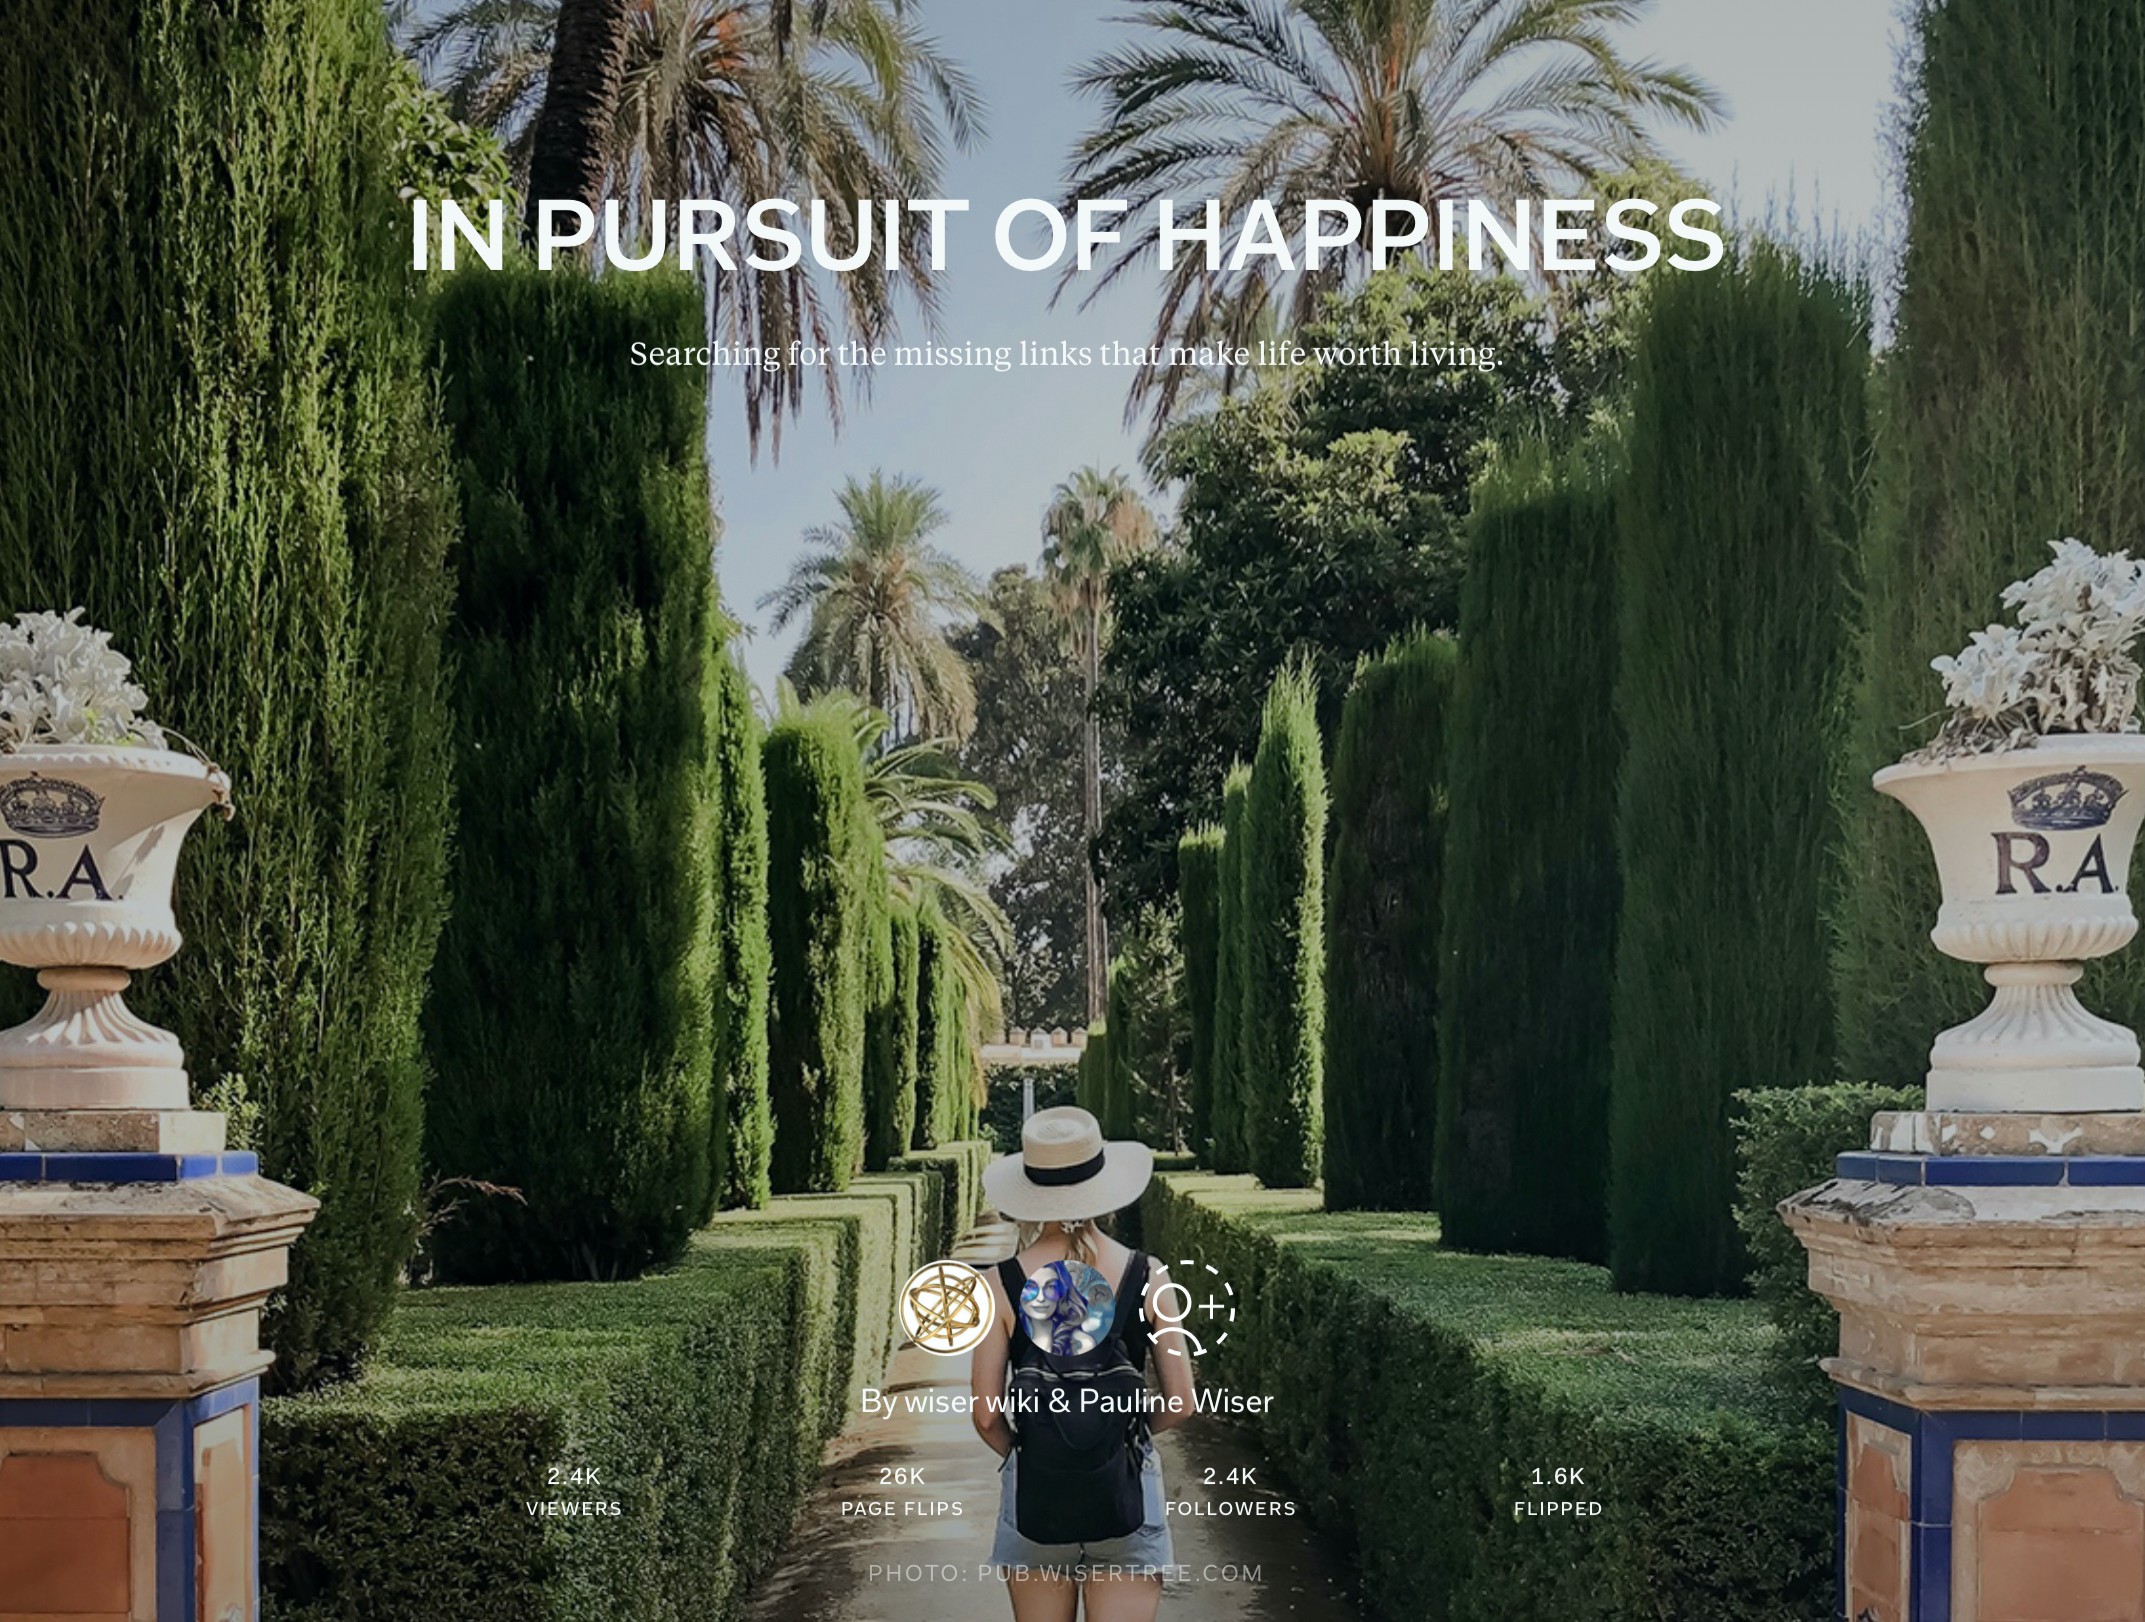 https://flipboard.com/@wiserwiki/in-pursuit-of-happiness-durfq6r2y